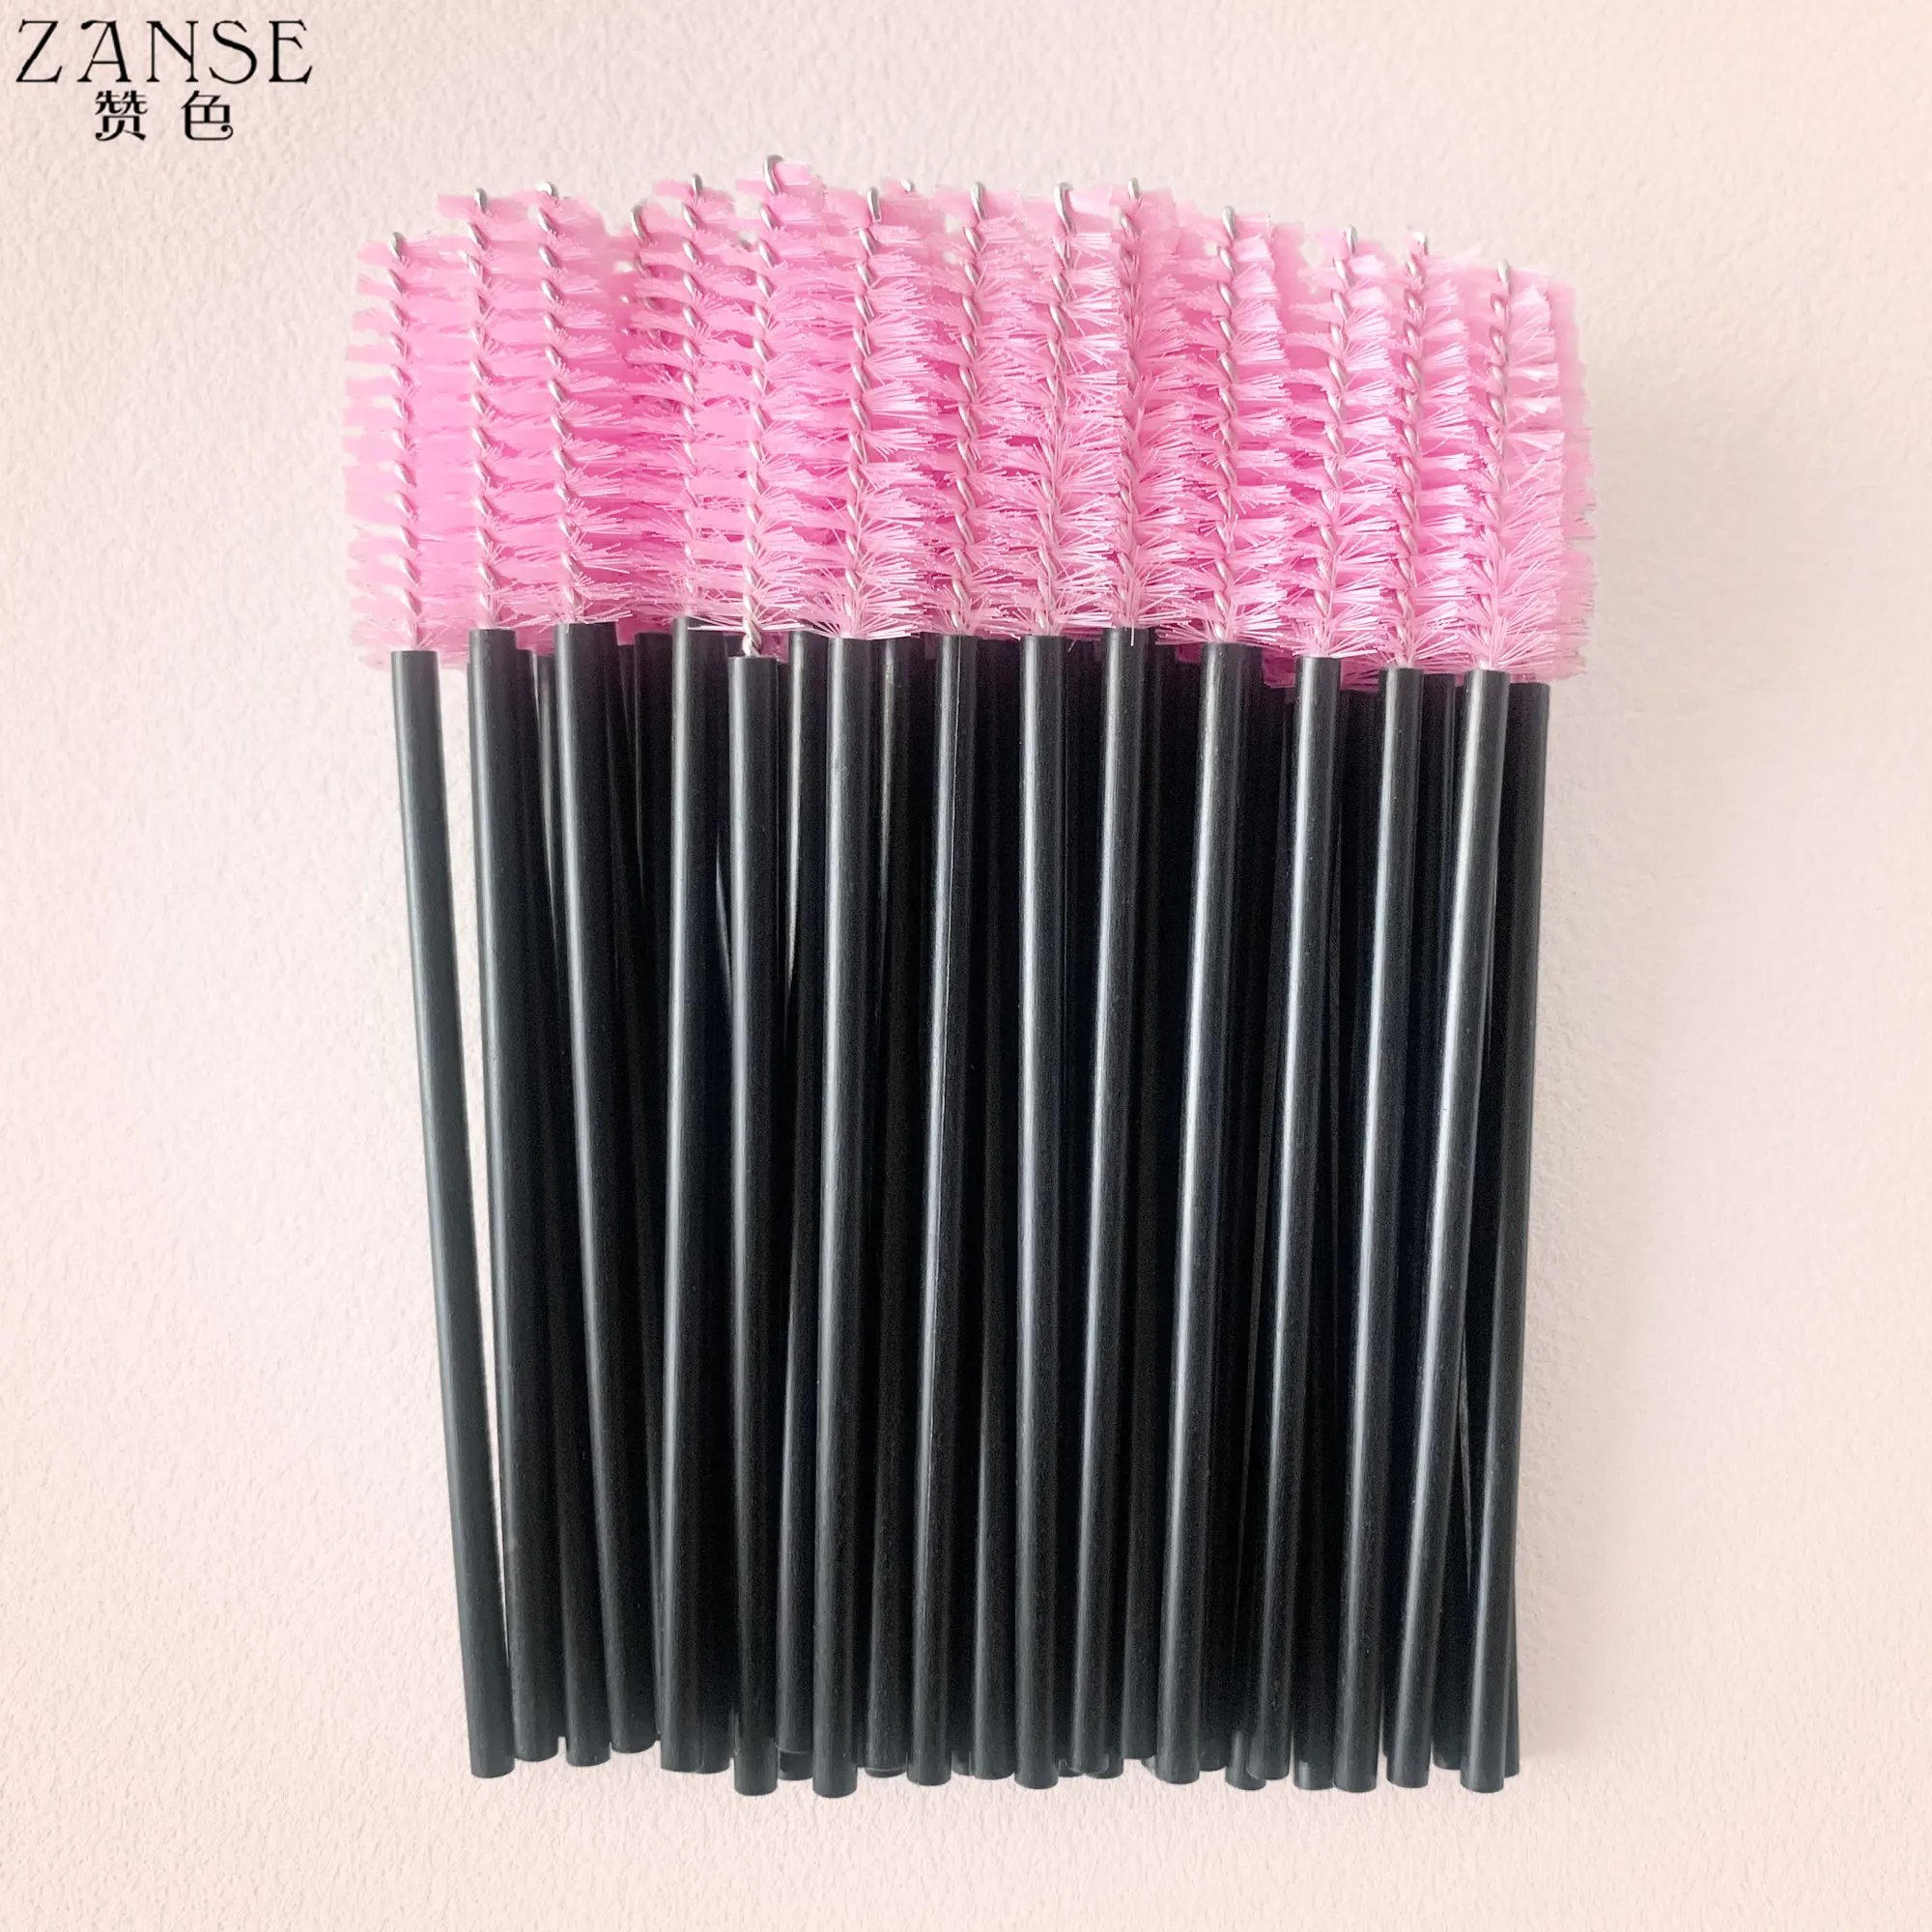 ZANSE Eyebrow Brush Mascara Wands Applicator Lash Cosmetic Brushes Makeup Lash Extension Supplies Disposable